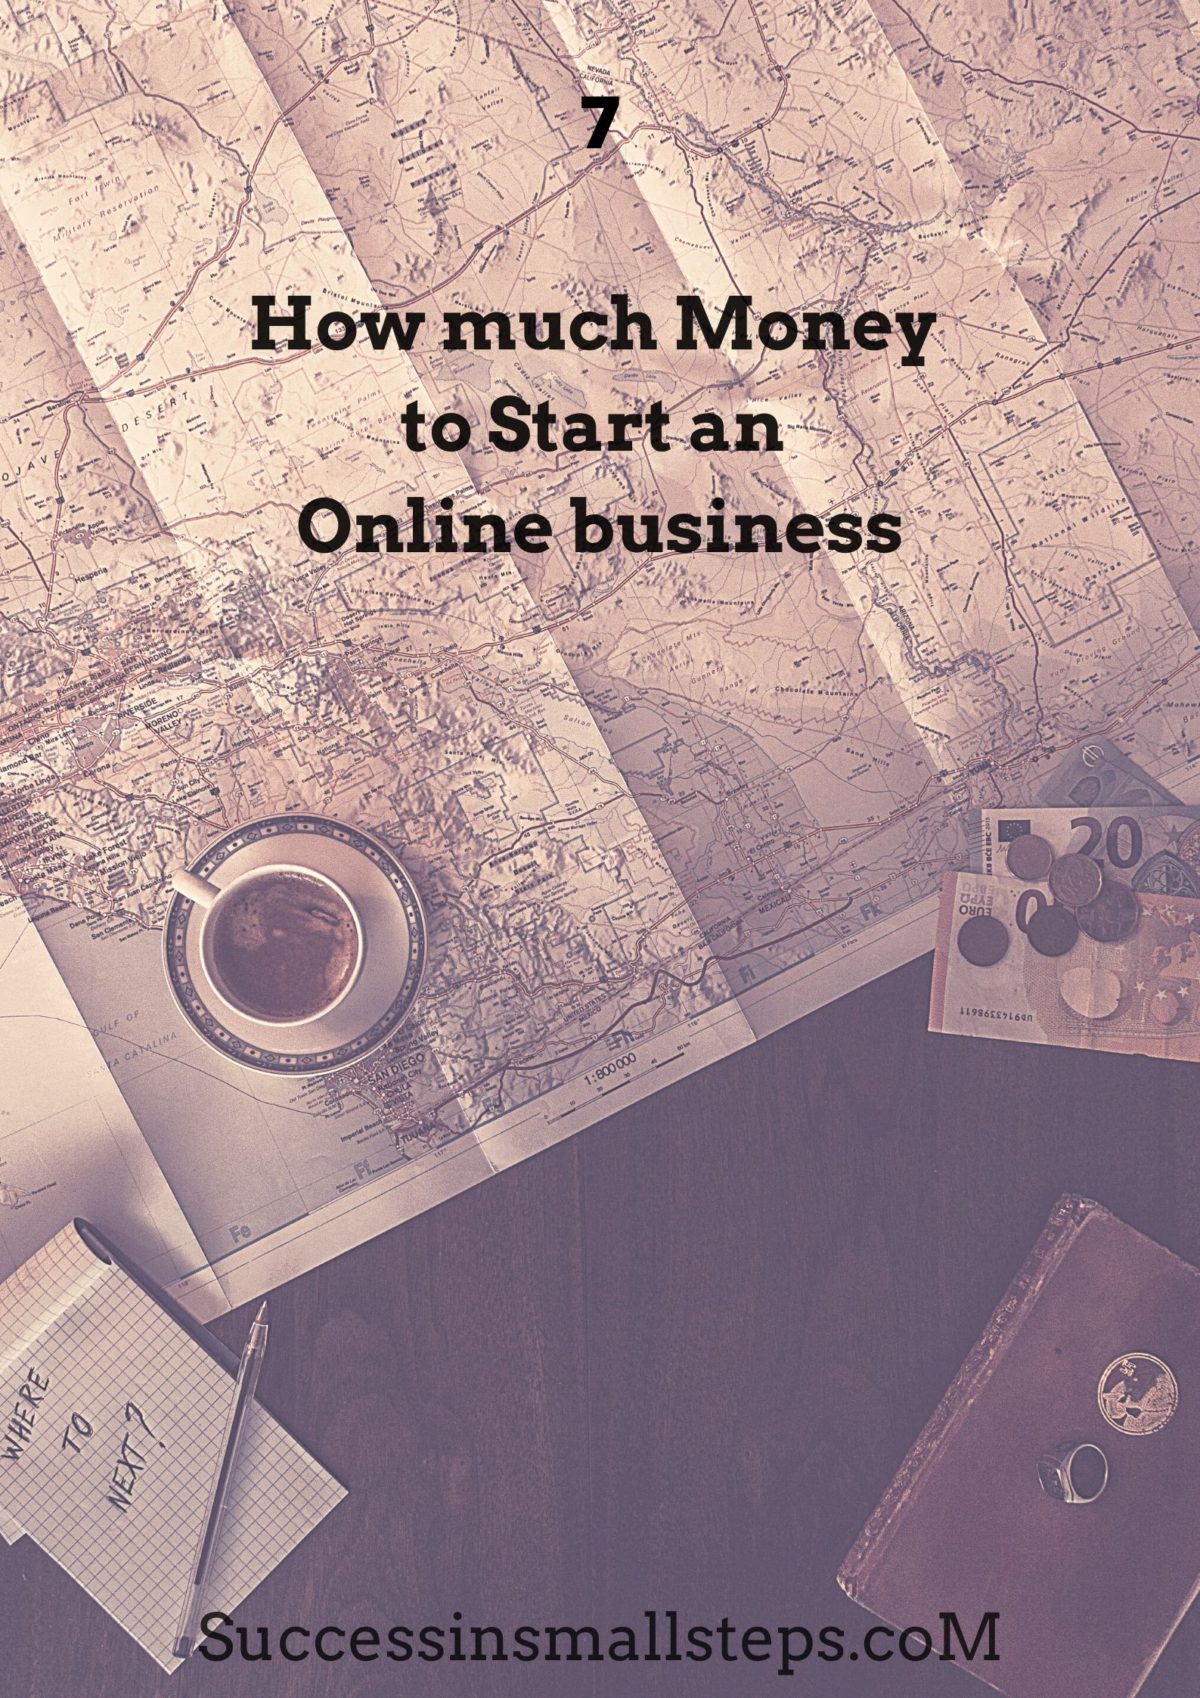 How much money to start an online business?